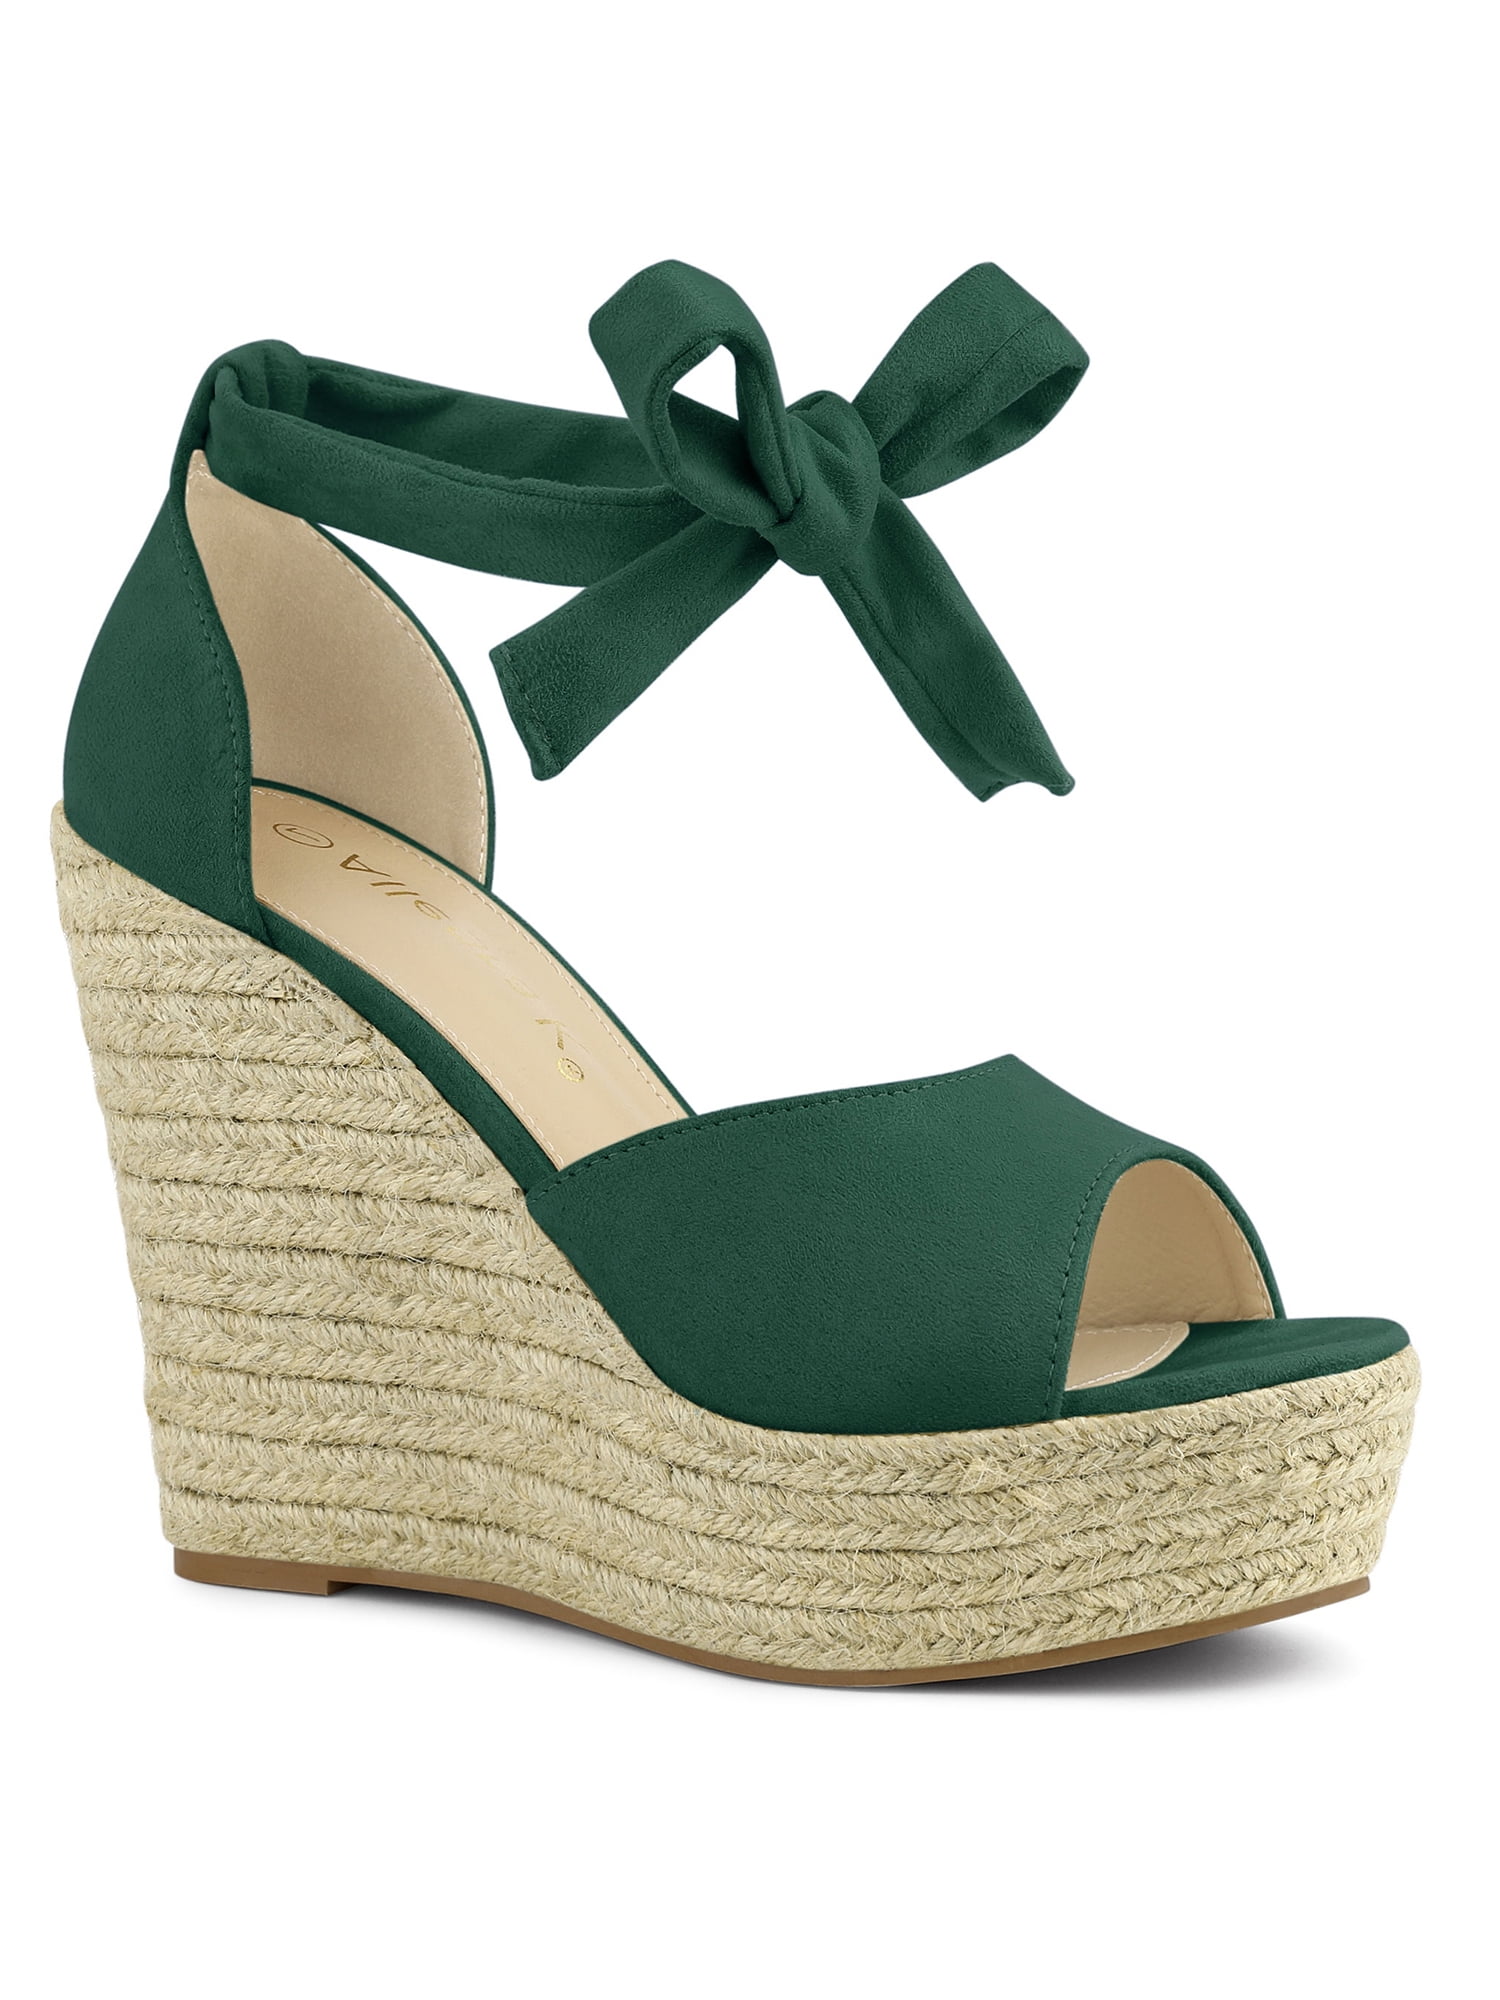 New Womens Platform Sandals Espadrille Ankle Tie Up Comfy Summer Shoes Sizes 3-8 